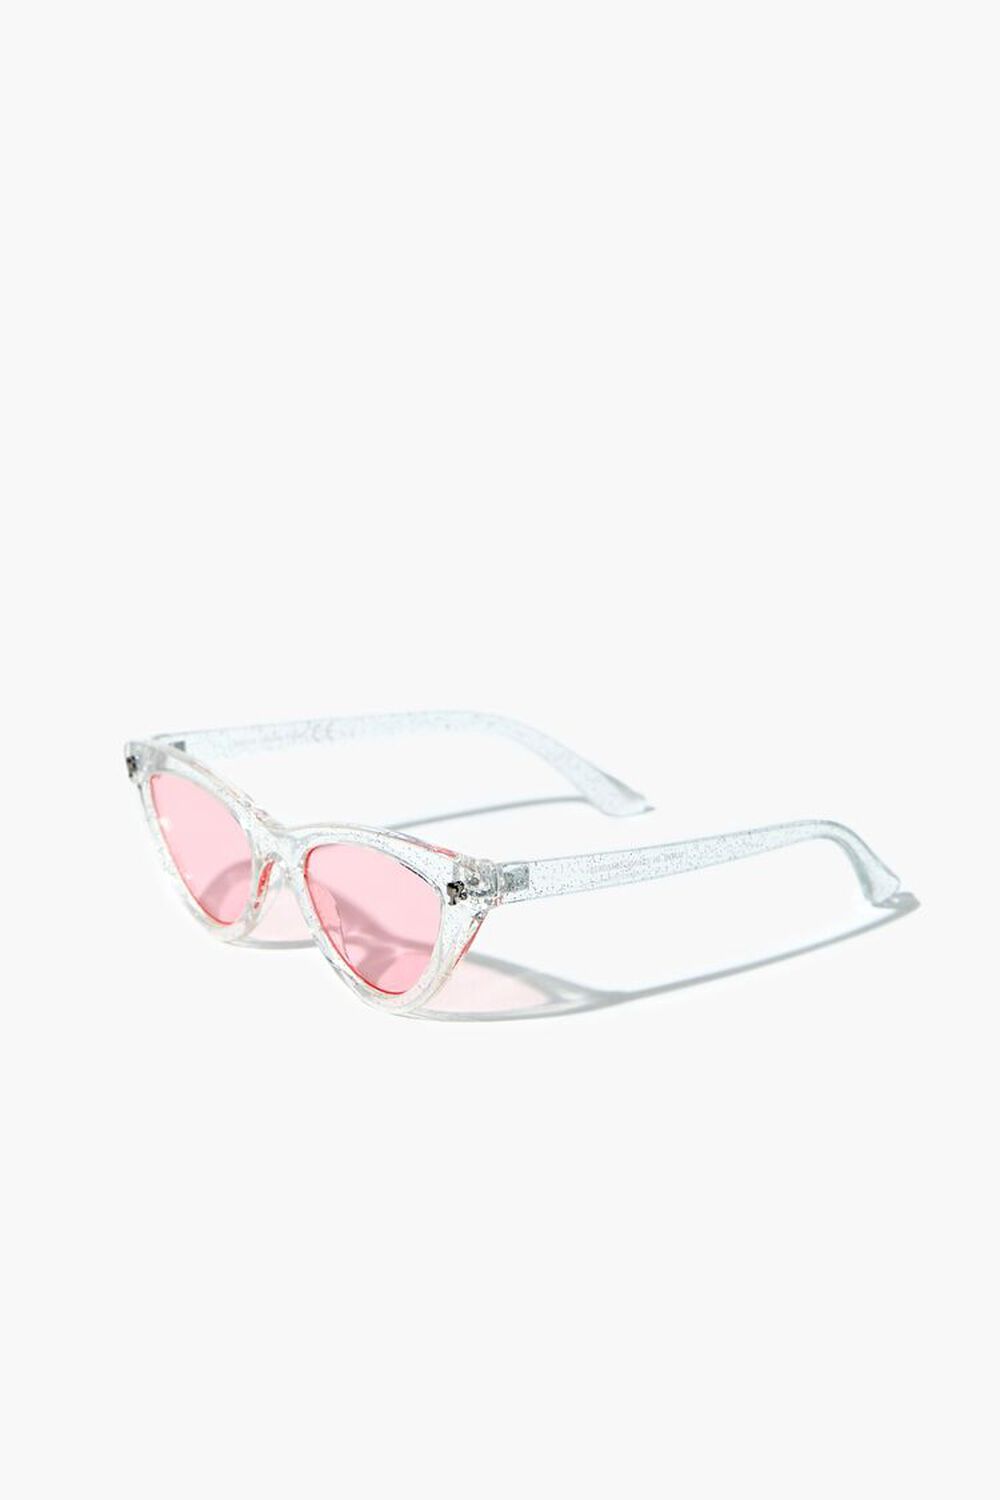 Women Sunglasses BARBIE Pink Princess Metal Cat Eye Oversized